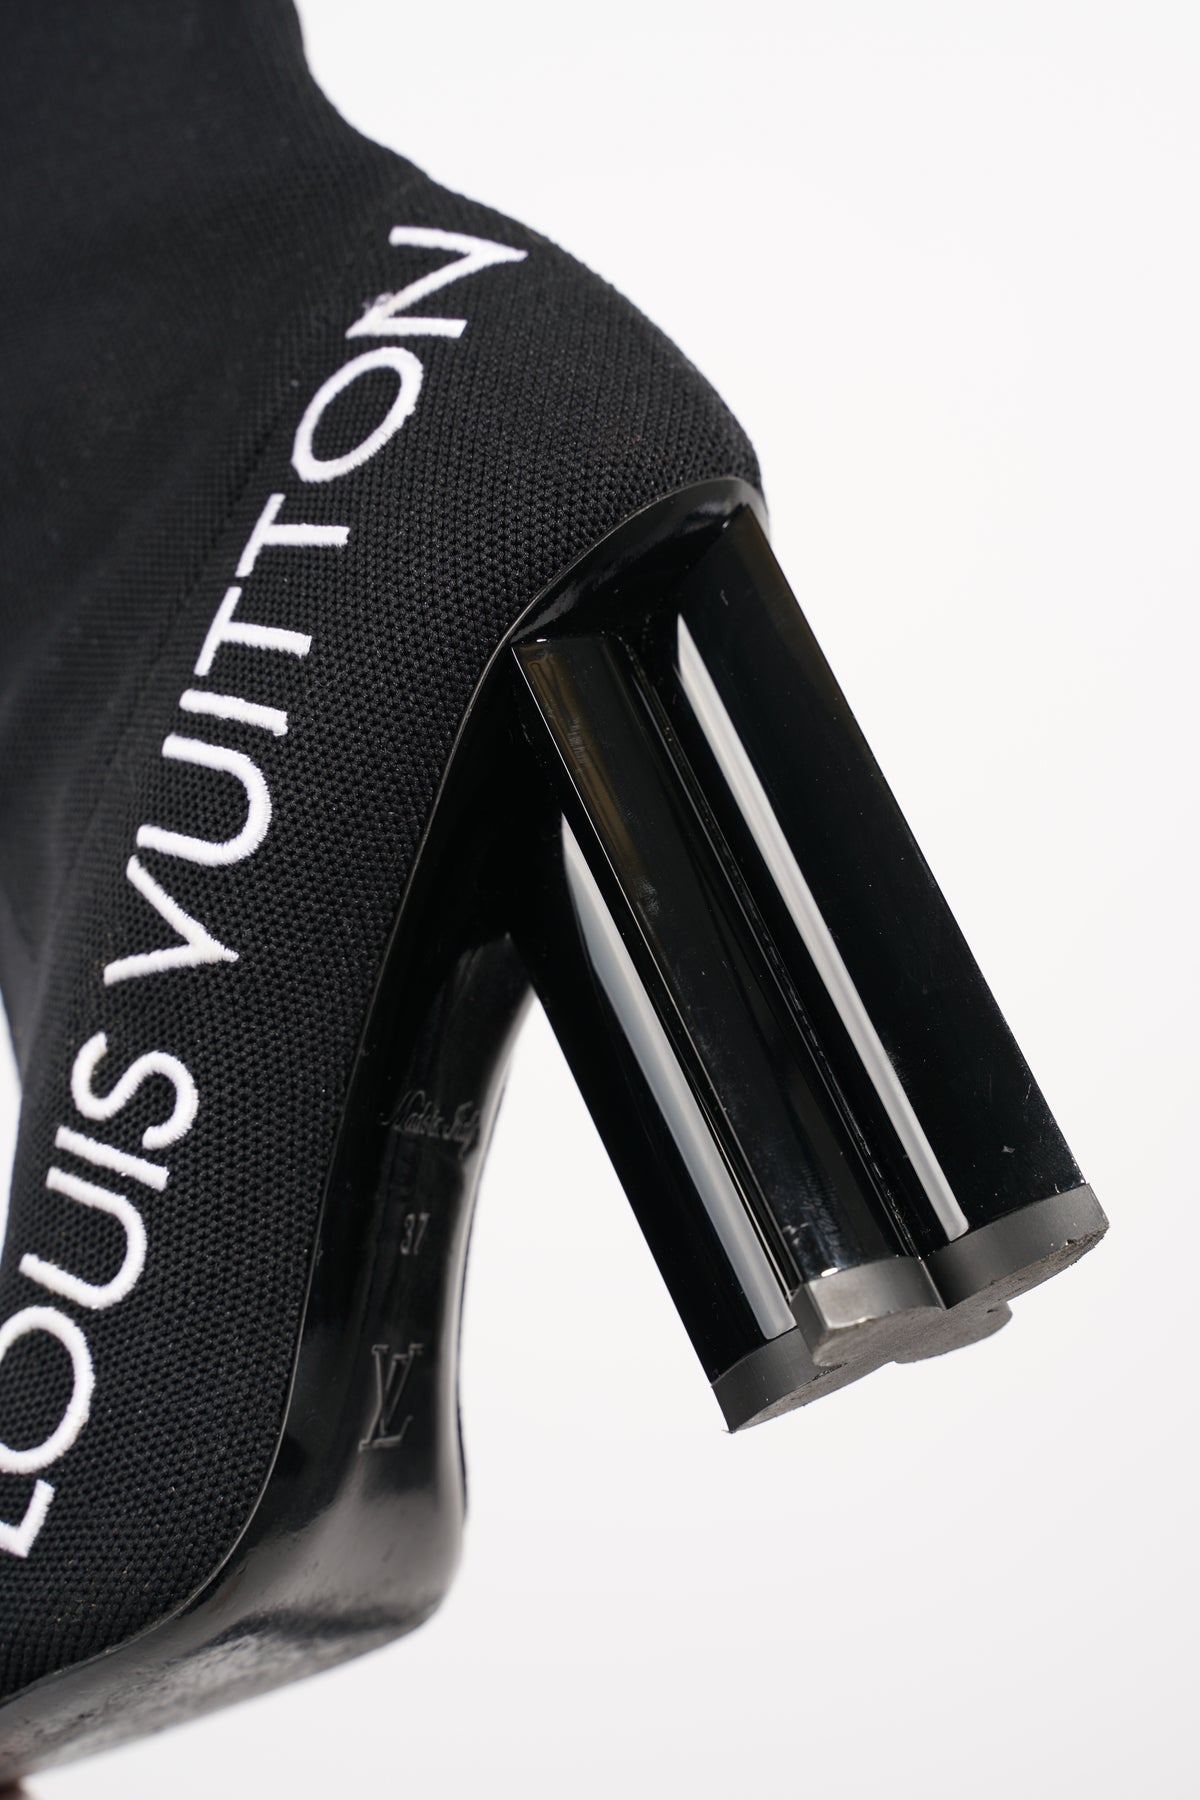 Héritage leather riding boots Louis Vuitton Black size 38 EU in